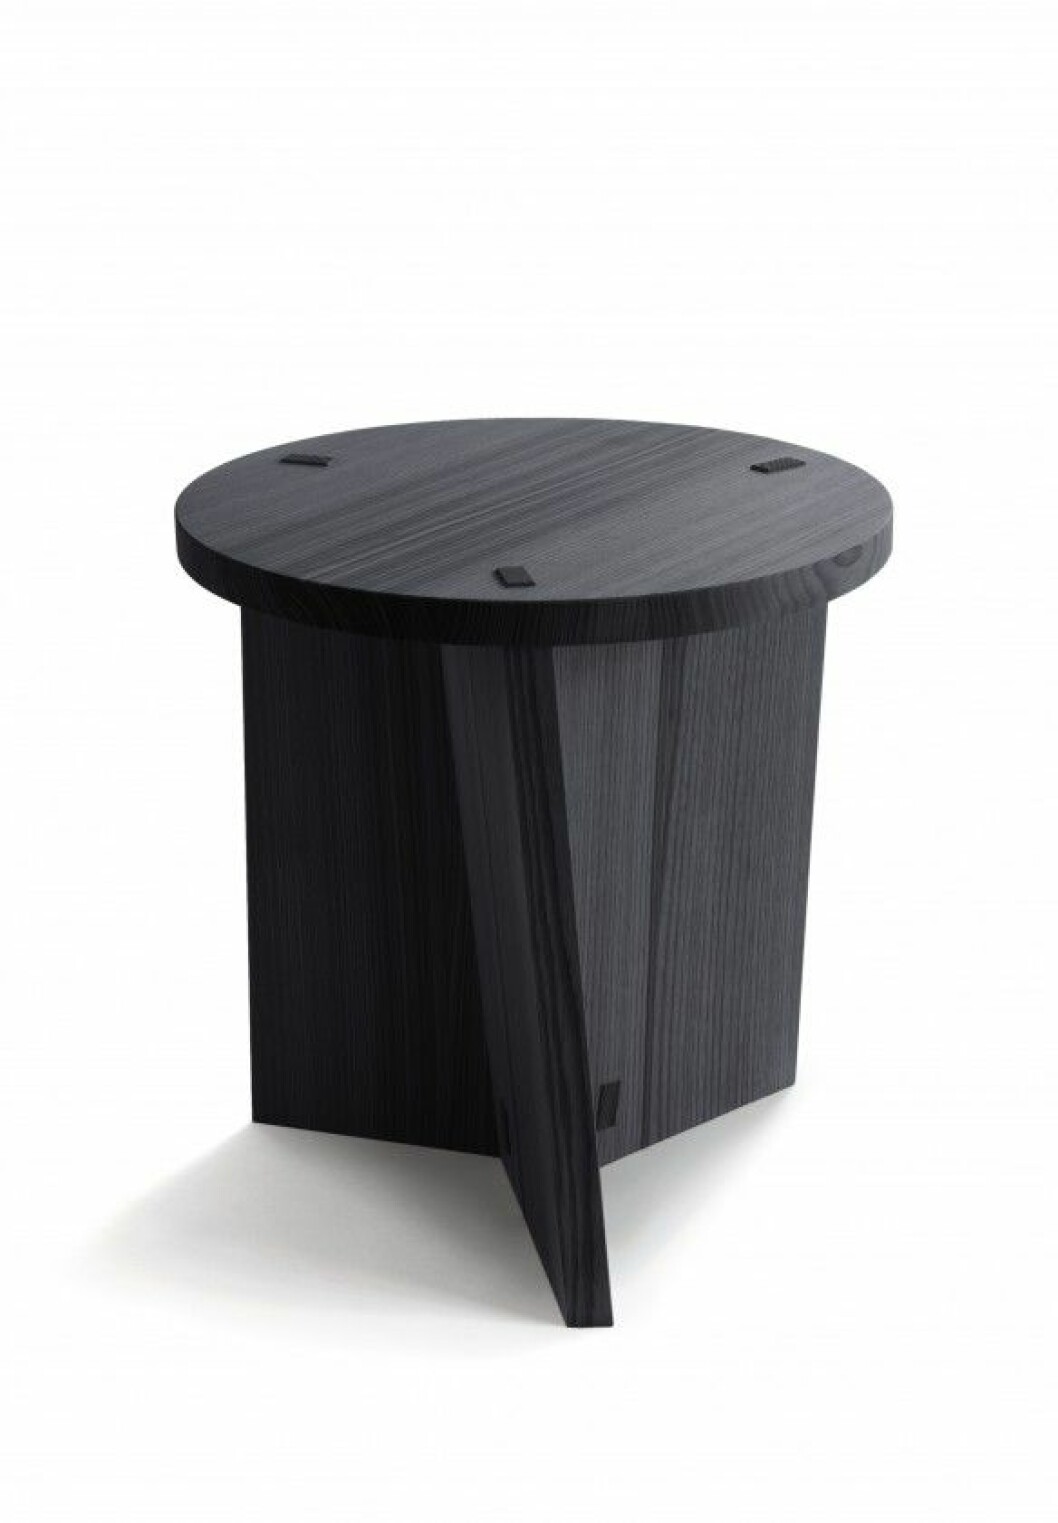 Marfa-stool-by-Claesson-Koivisto-Rune_photo-Studio-Chikako-Harada_N-I-K-A-R-I-1-585x842